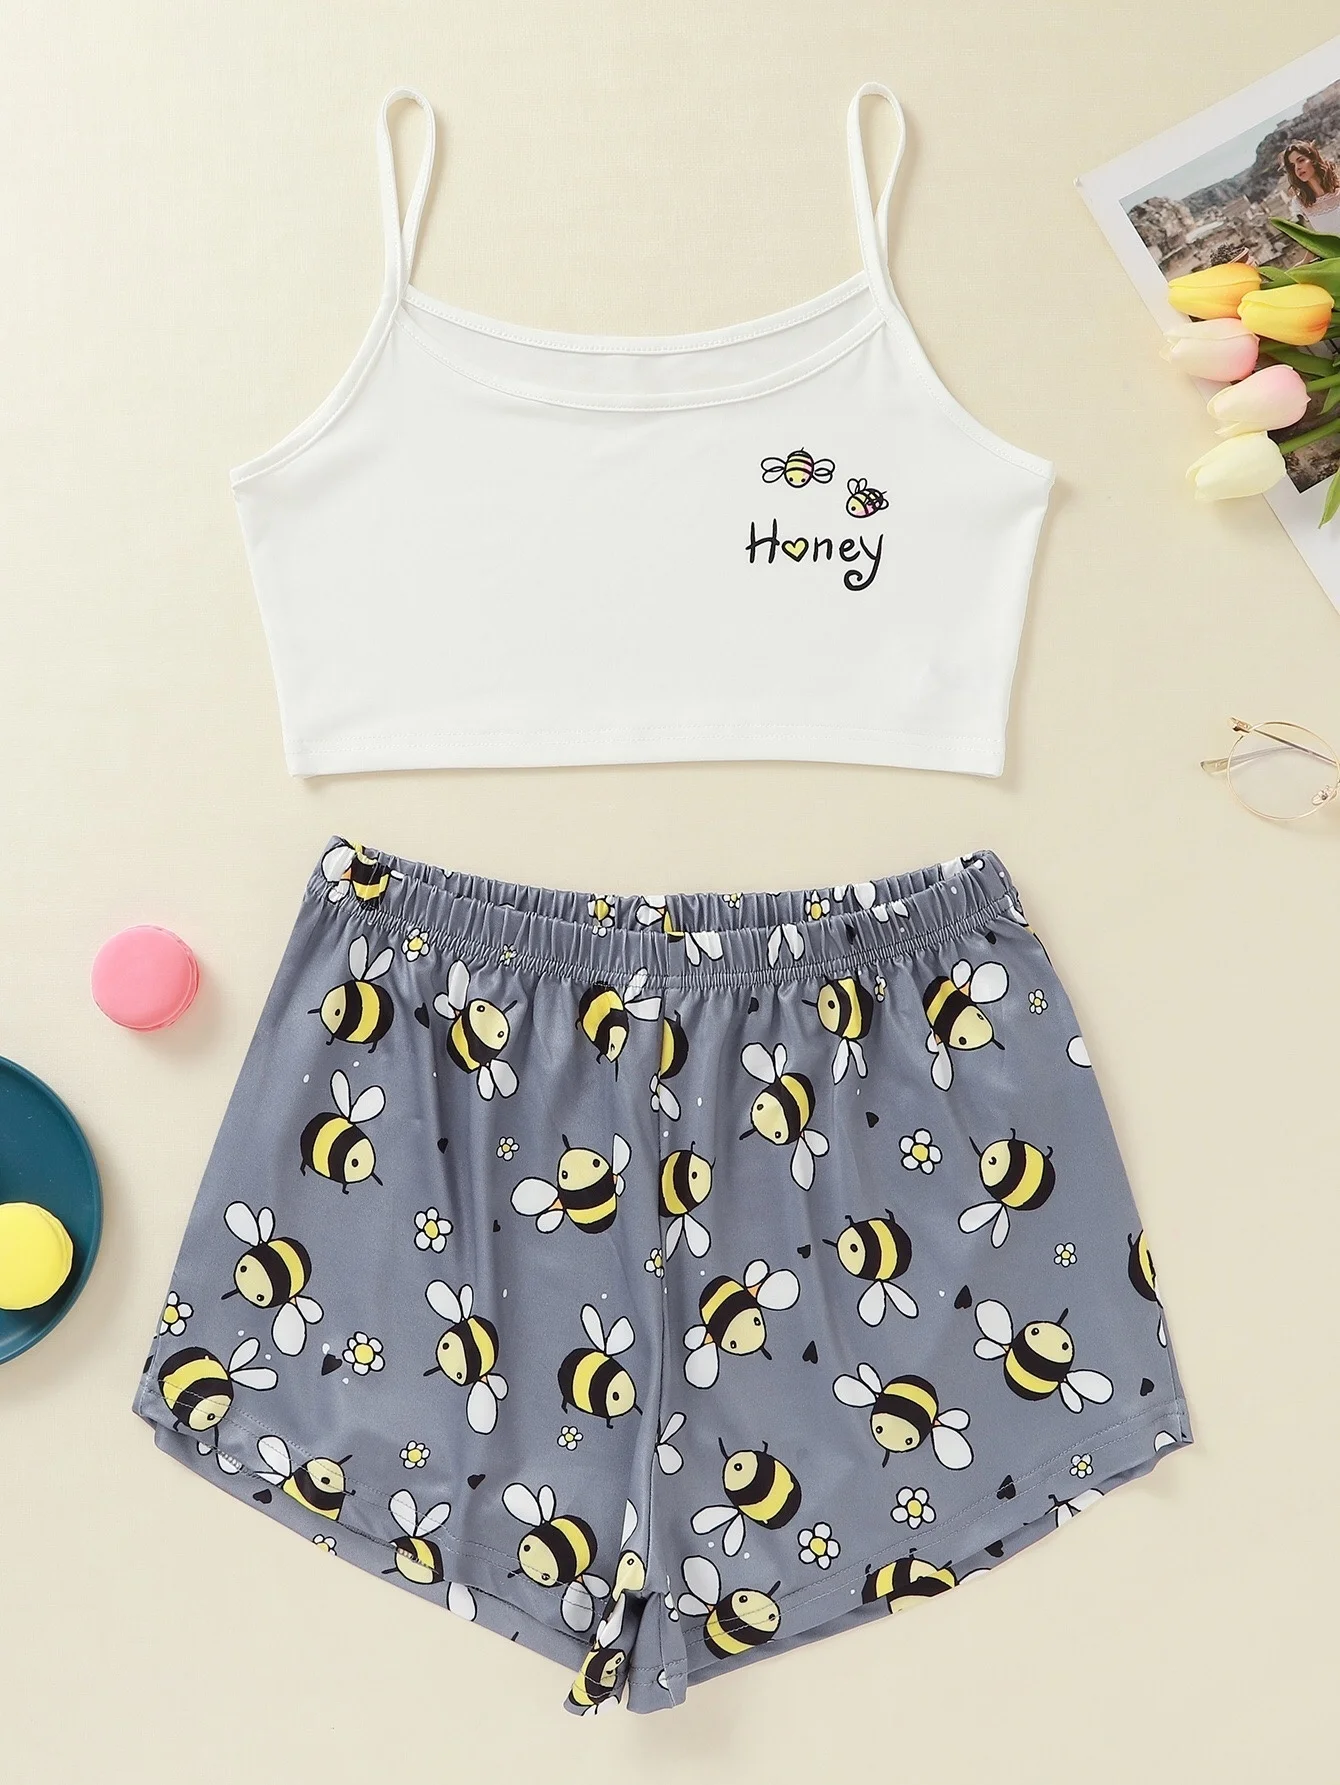 

New Style Fashion Lady Summer Cartoon Honey Bee Print Camisole With Shorts Pajama Set Comfort INS Home Wear Sleepwear Underwear